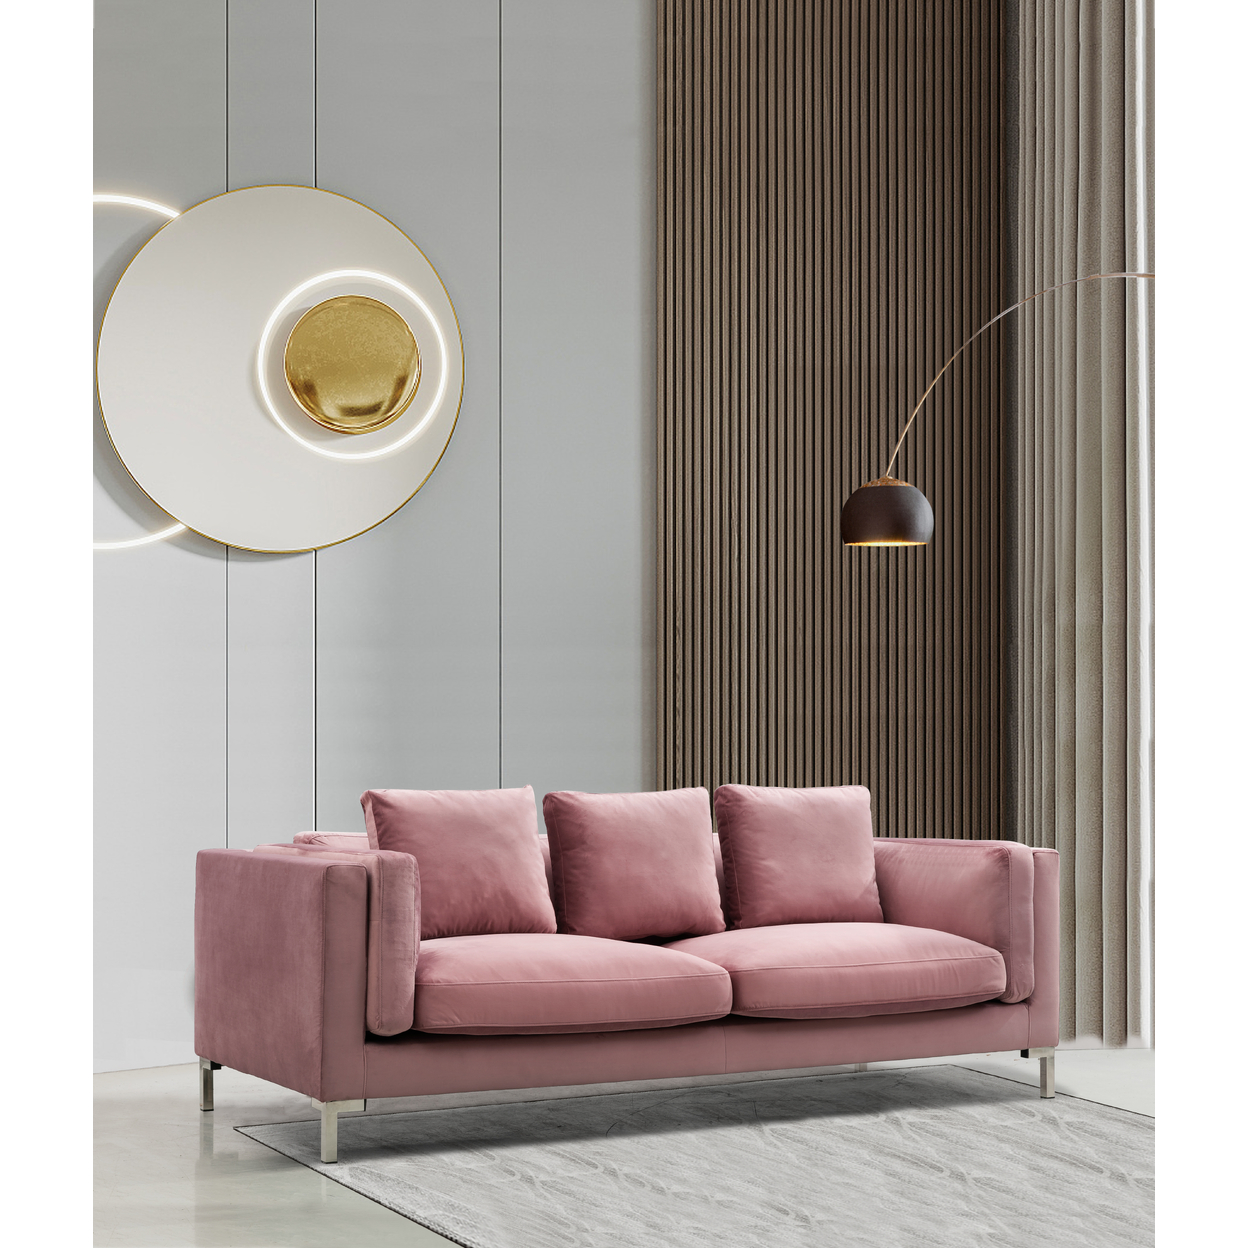 Iconic Home Everlie Sofa Velvet Upholstered Multi-Cushion Seat Loose Back Shelter Arm Design Silver Tone Metal Y-Legs - Blush